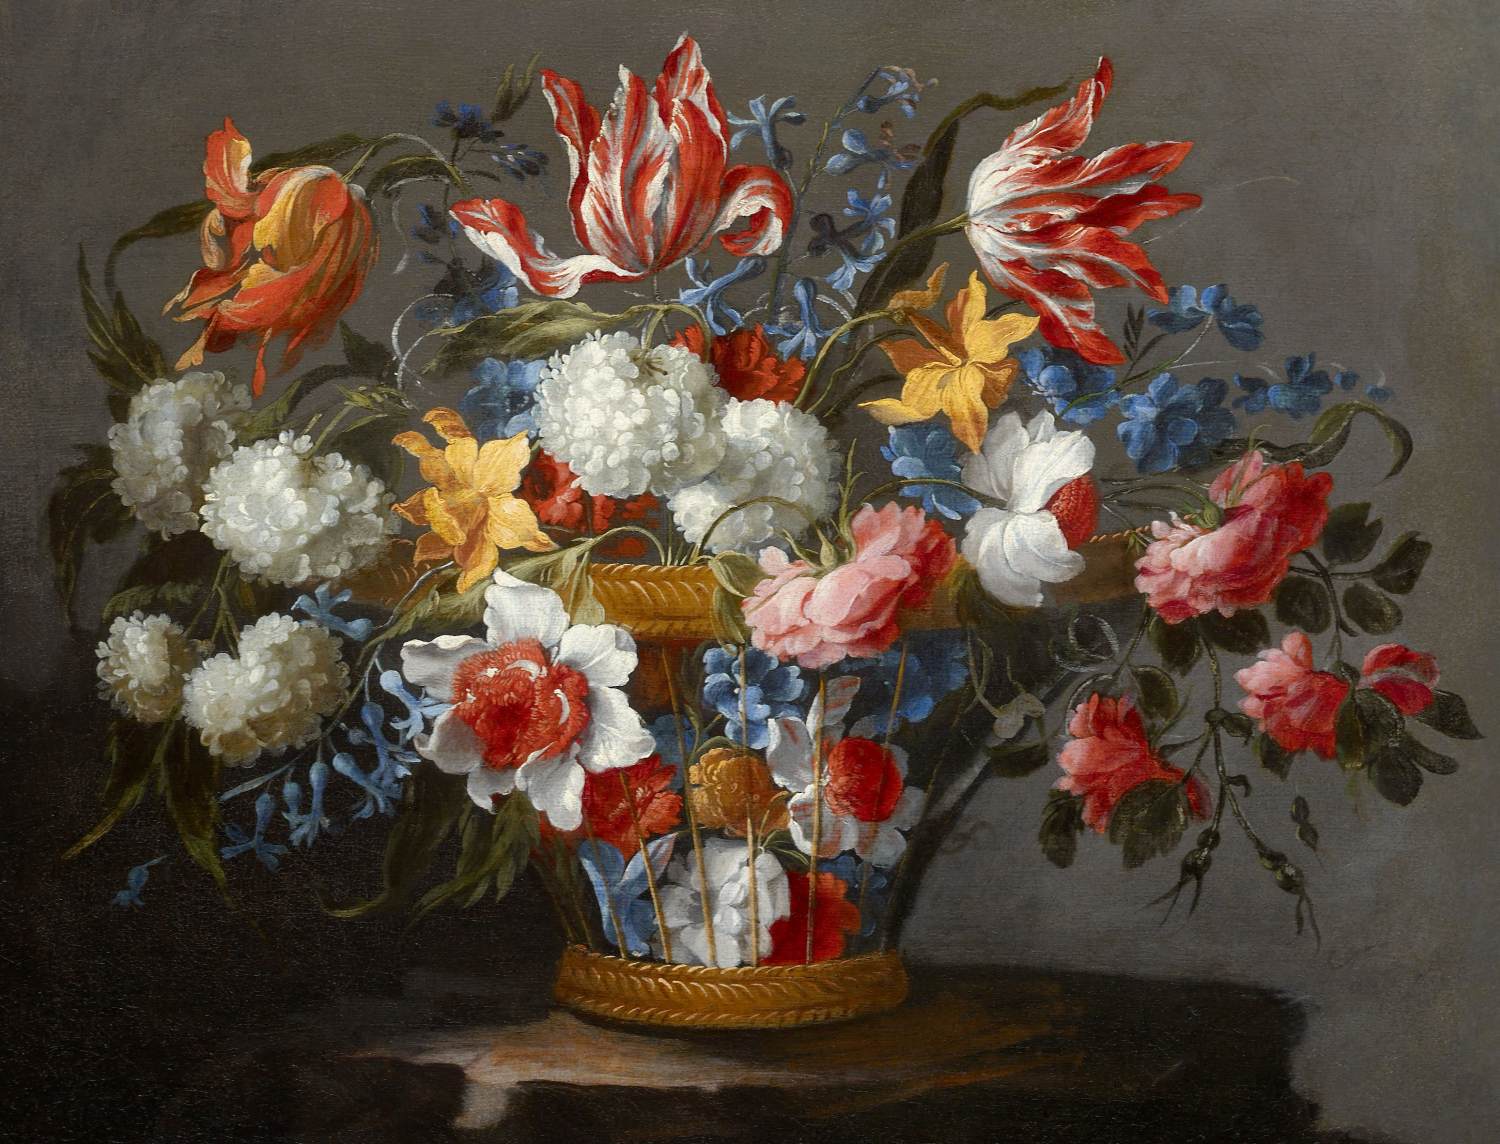 A Wicker Basket with Flowers